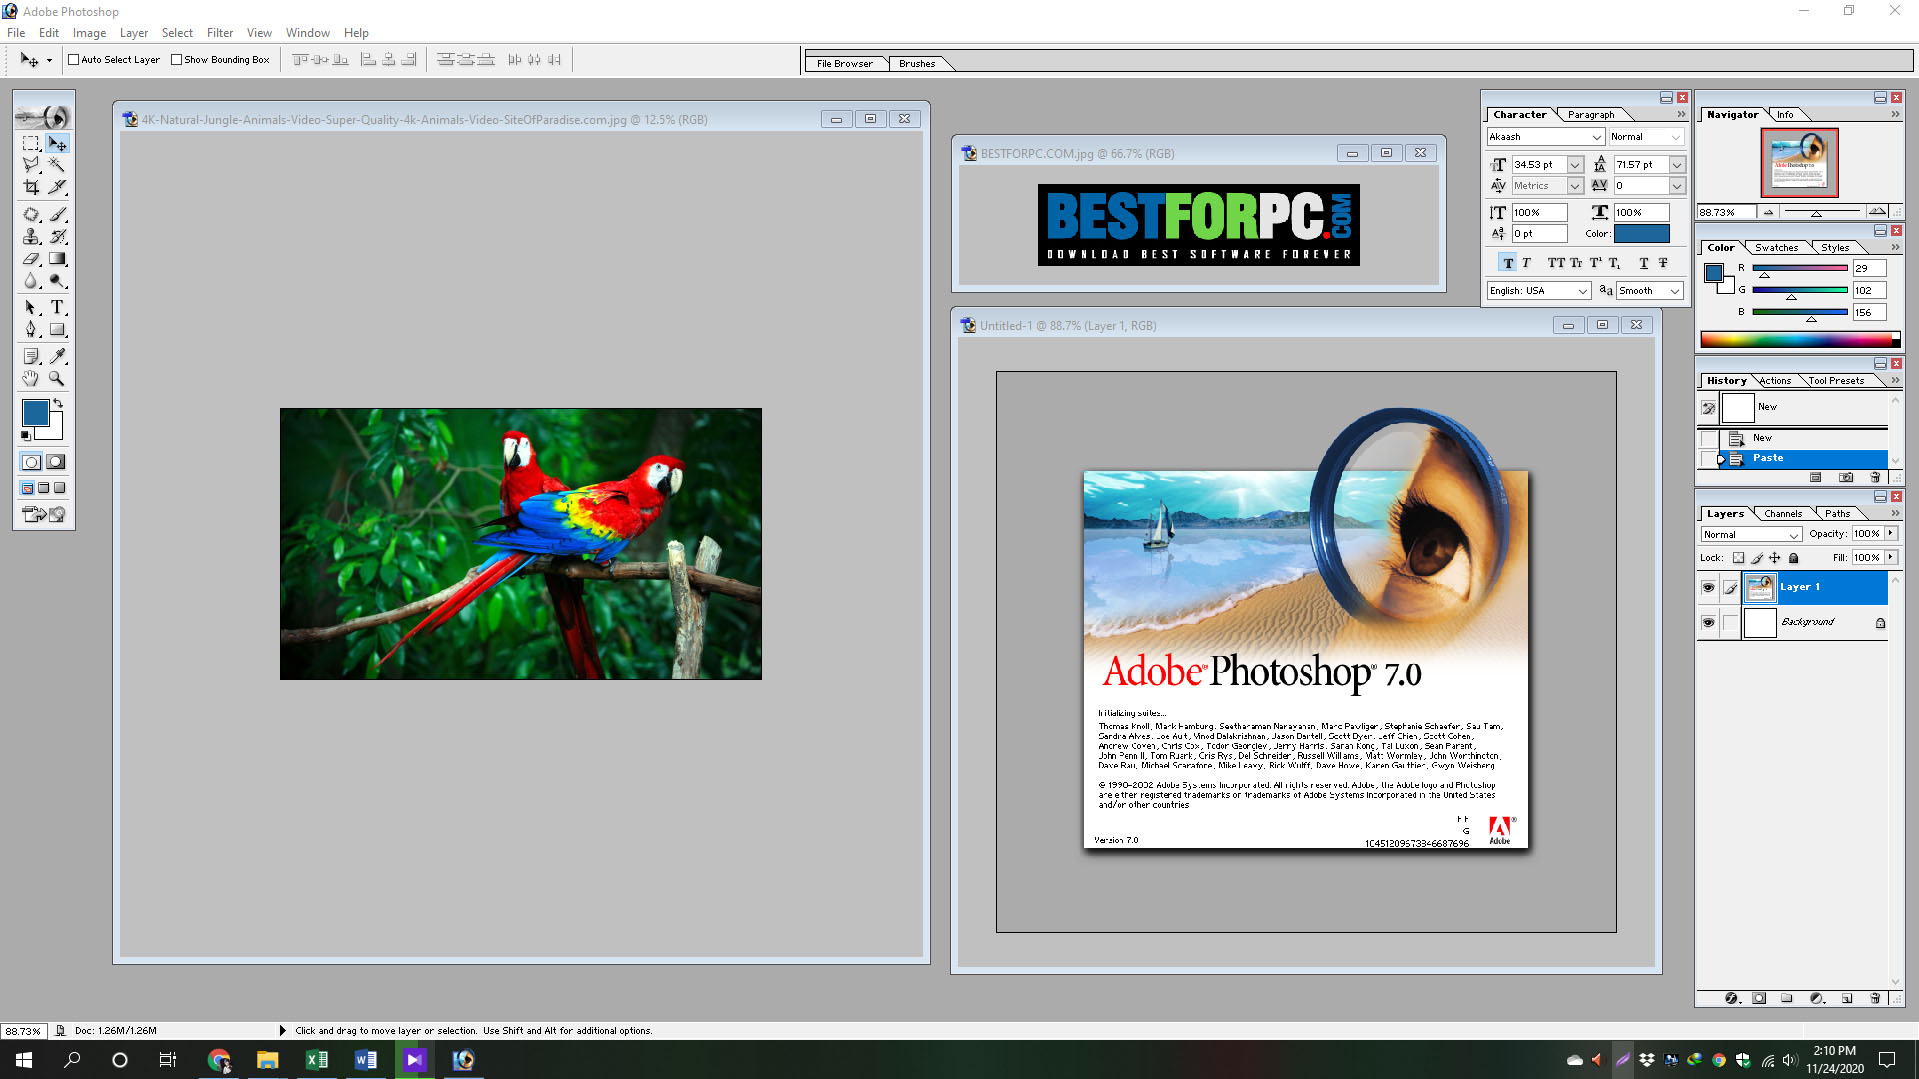 Adobe photoshop free download windows 7 full version excel app download